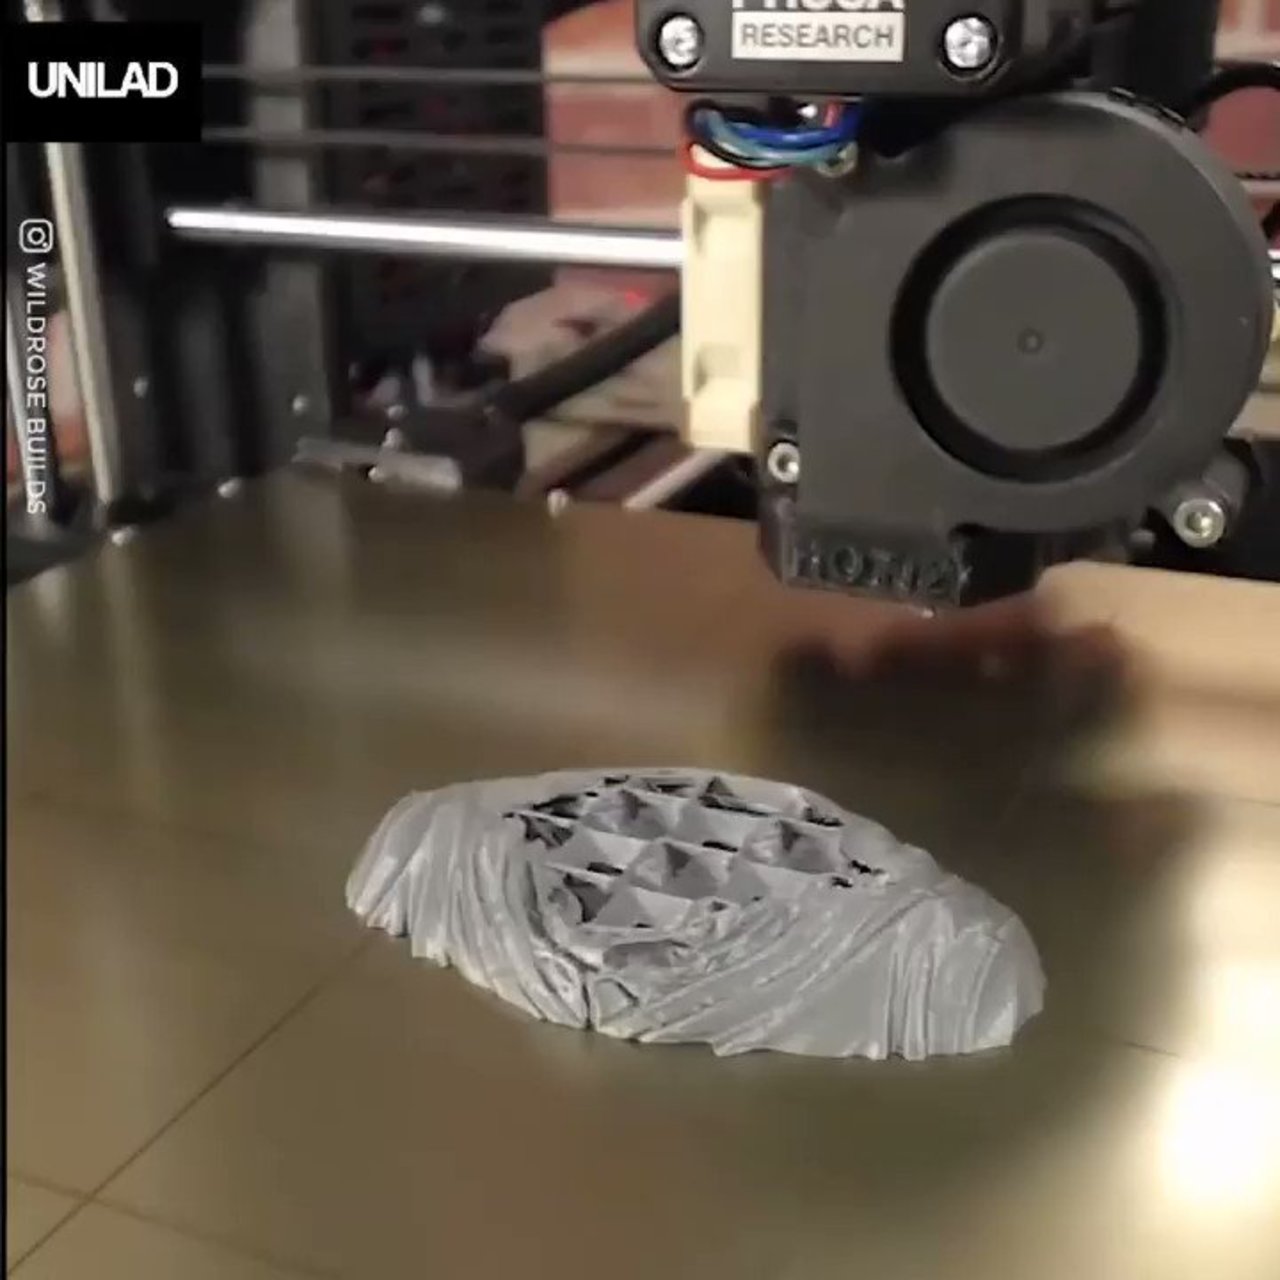 The cool magics of #3D printing #tech #innovation #Robotics #AI #robots #3DPrint #4IR #3Dprinting HT @HarbRimah CC @enricomolinari @MikeQuindazzi @Paula_Piccard @HaroldSinnott @kuriharan @mvollmer1 @enricomolinari https://t.co/t9dh2N7iiF